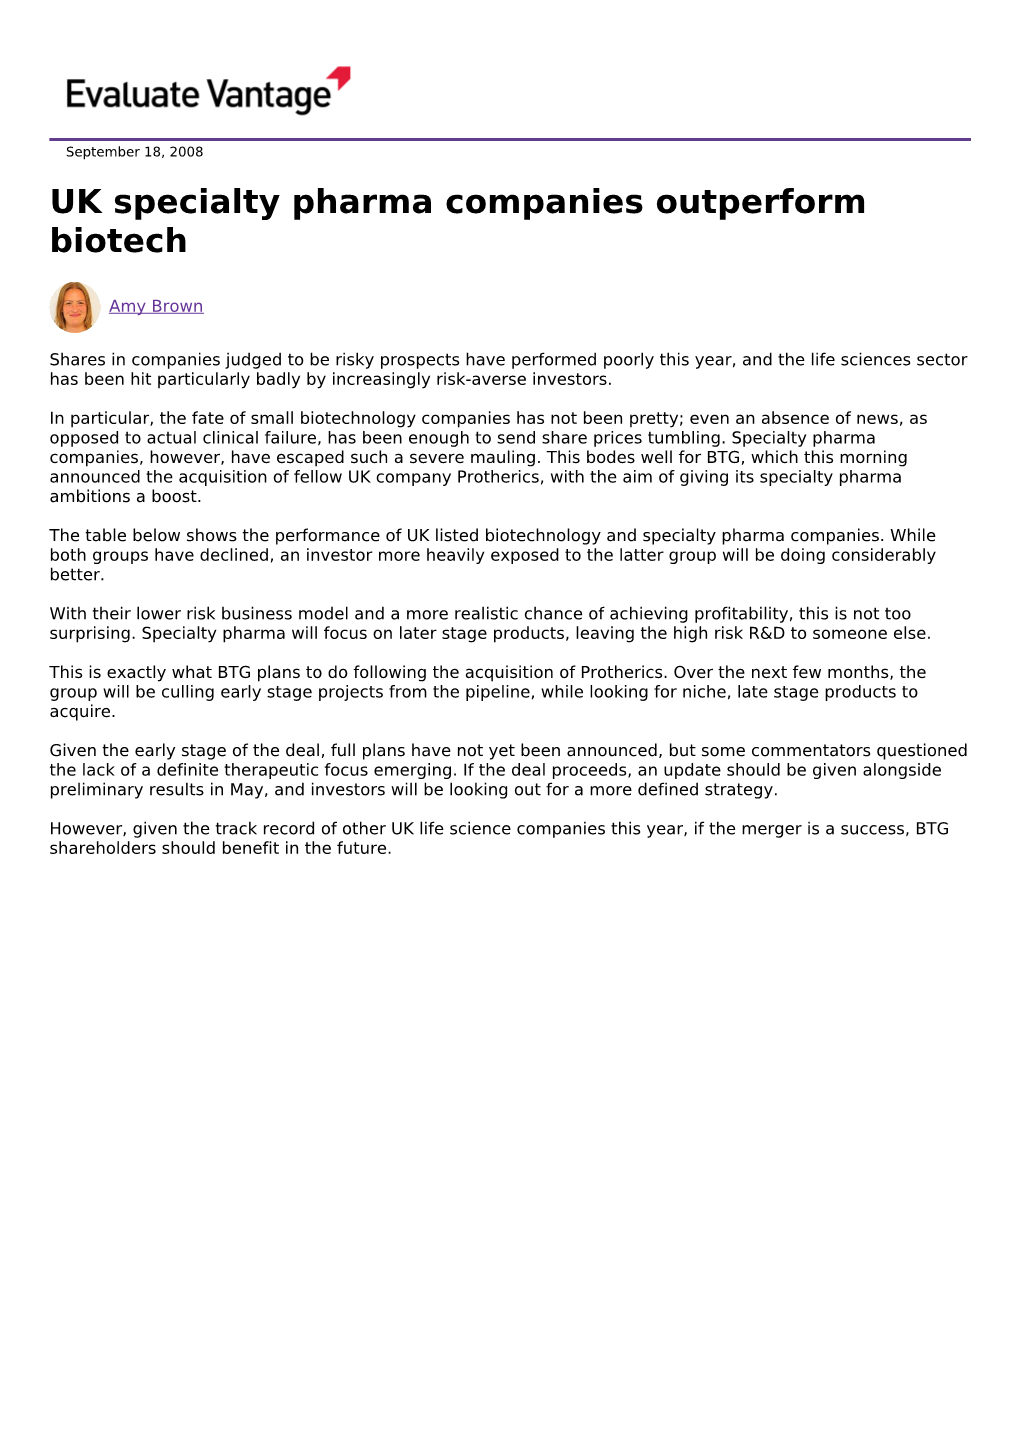 UK Specialty Pharma Companies Outperform Biotech